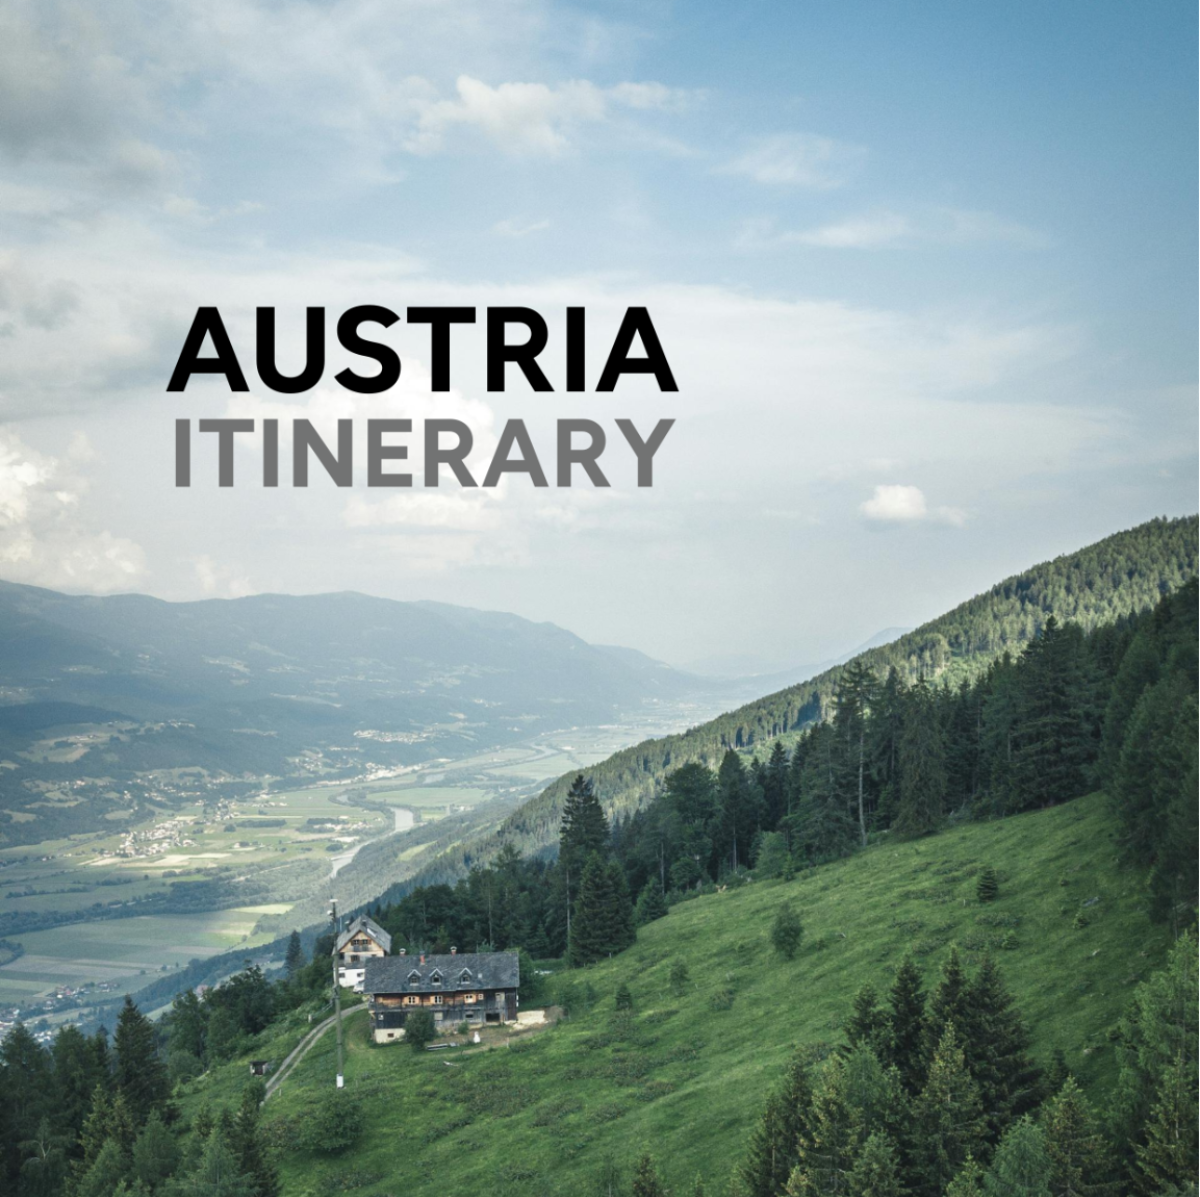 Austria Itinerary Template